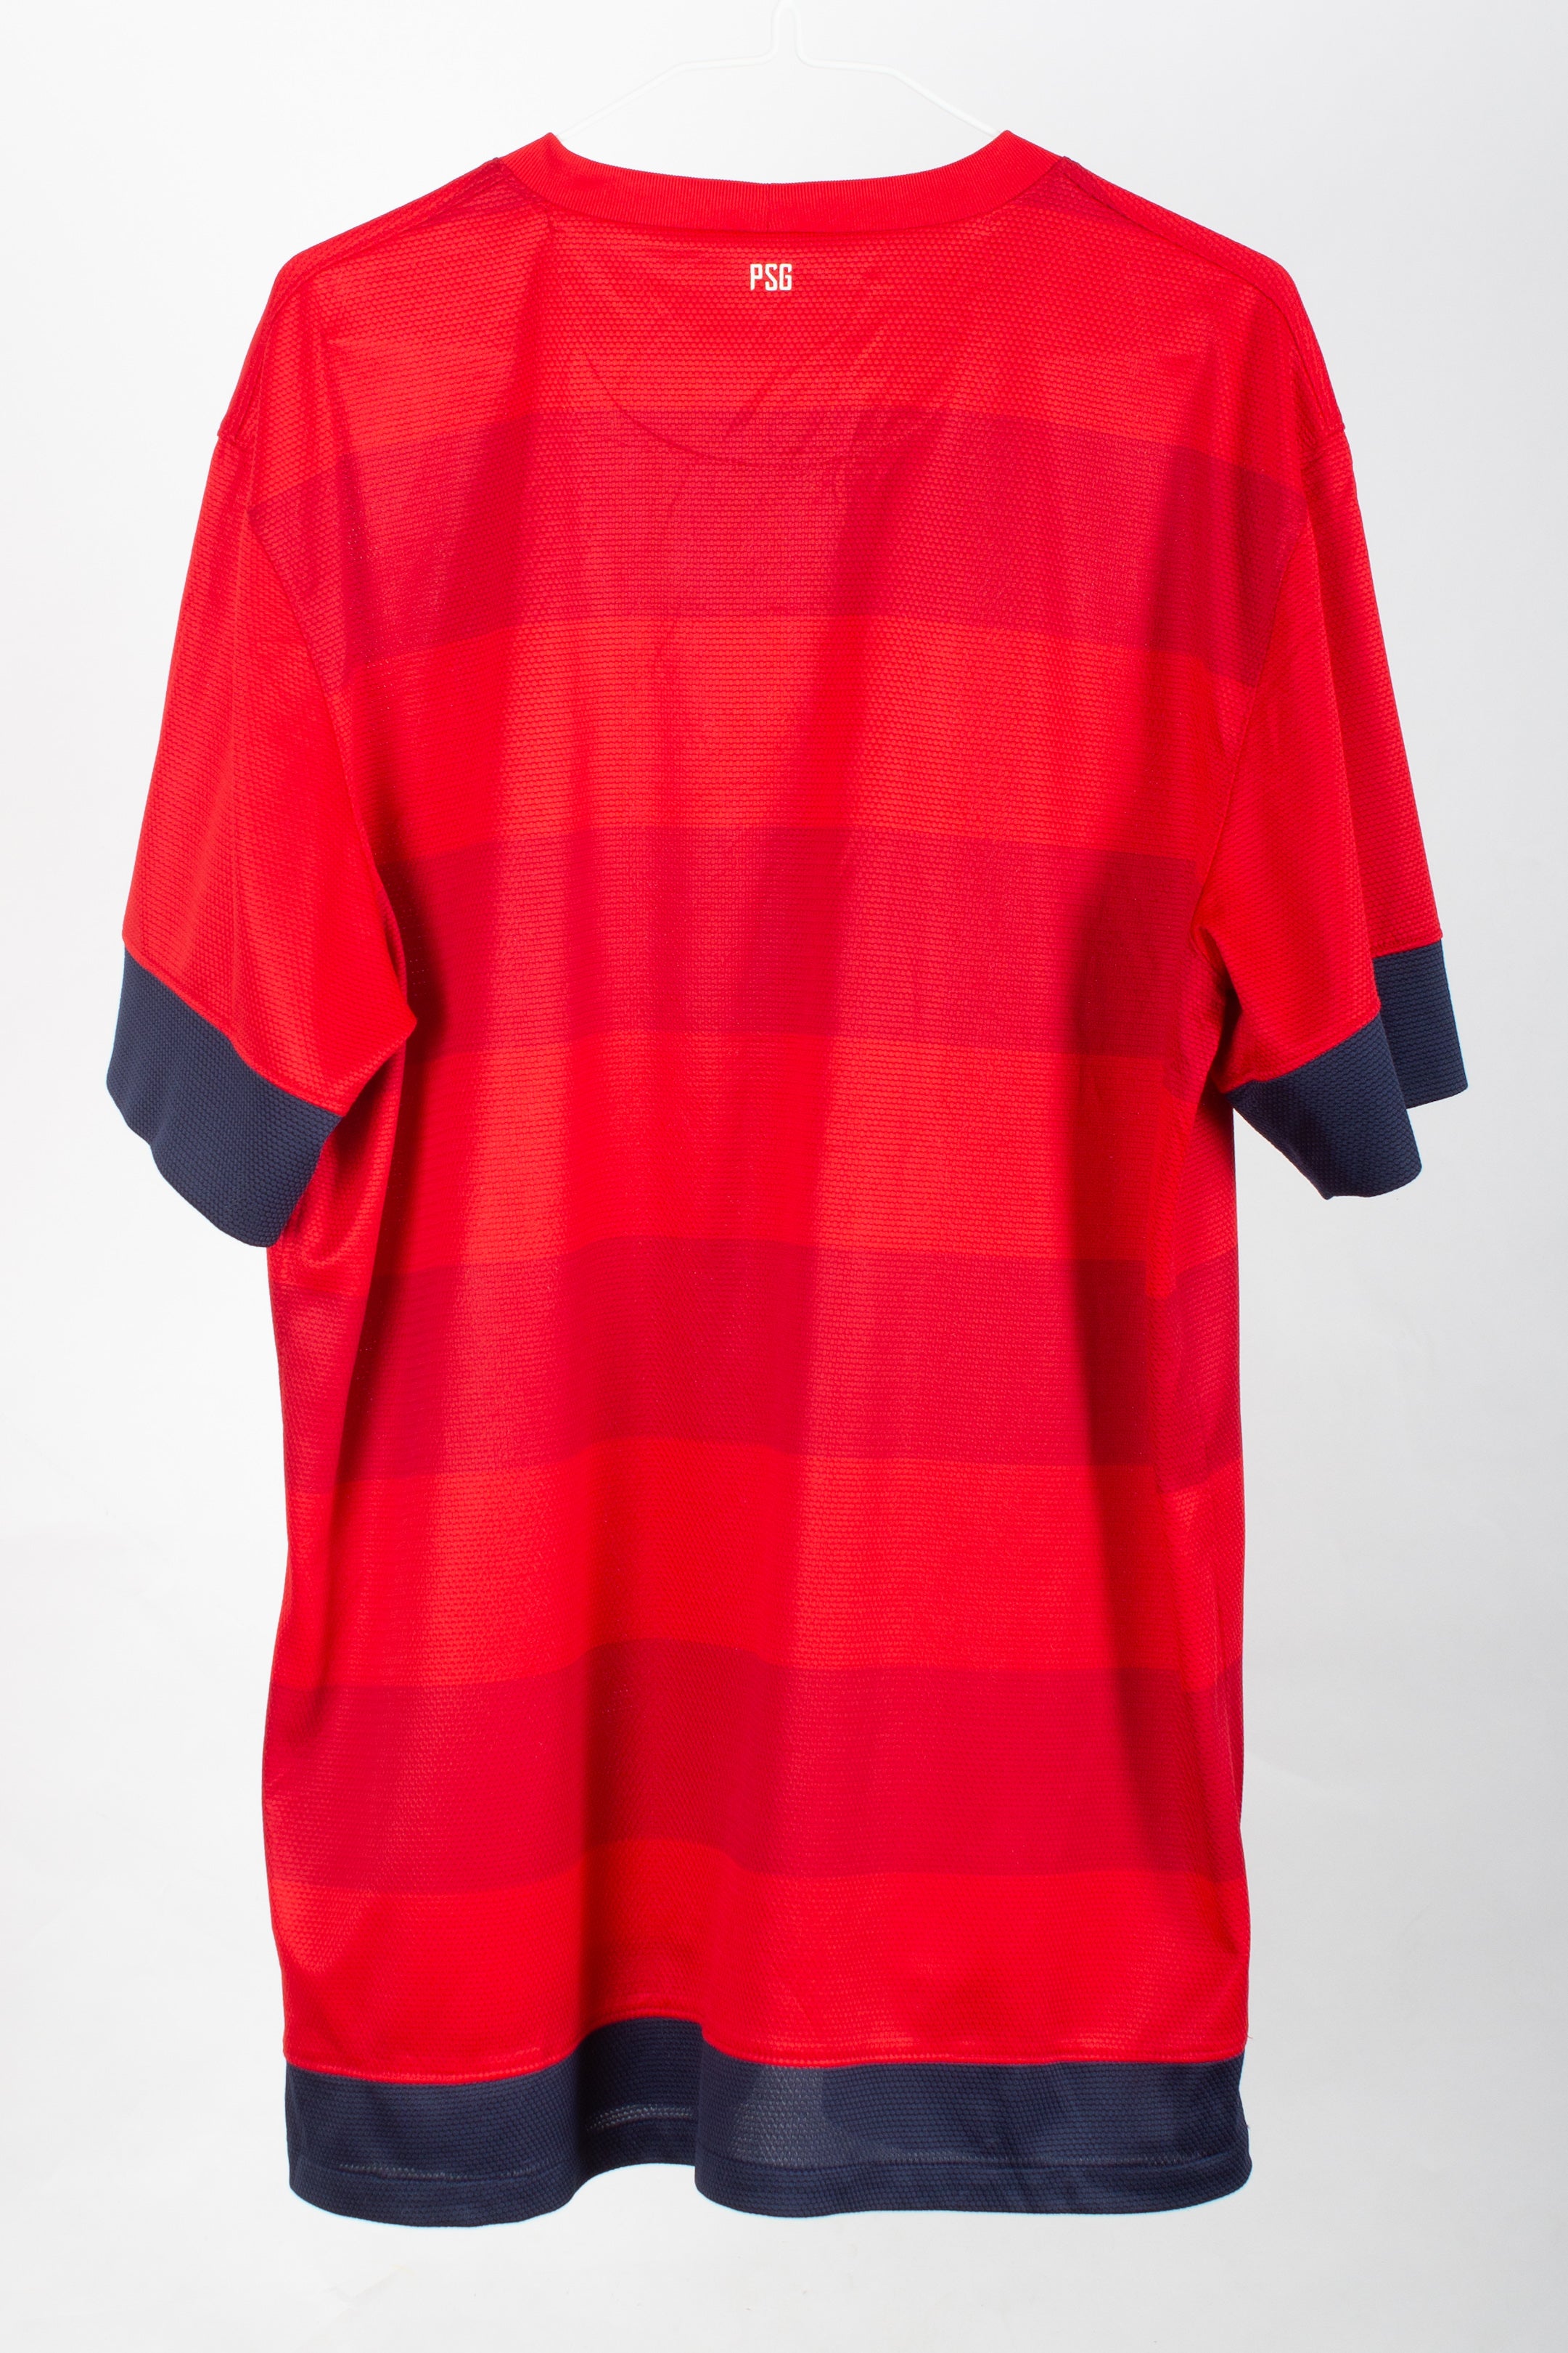 PSG 2012/13 Away Shirt (L)